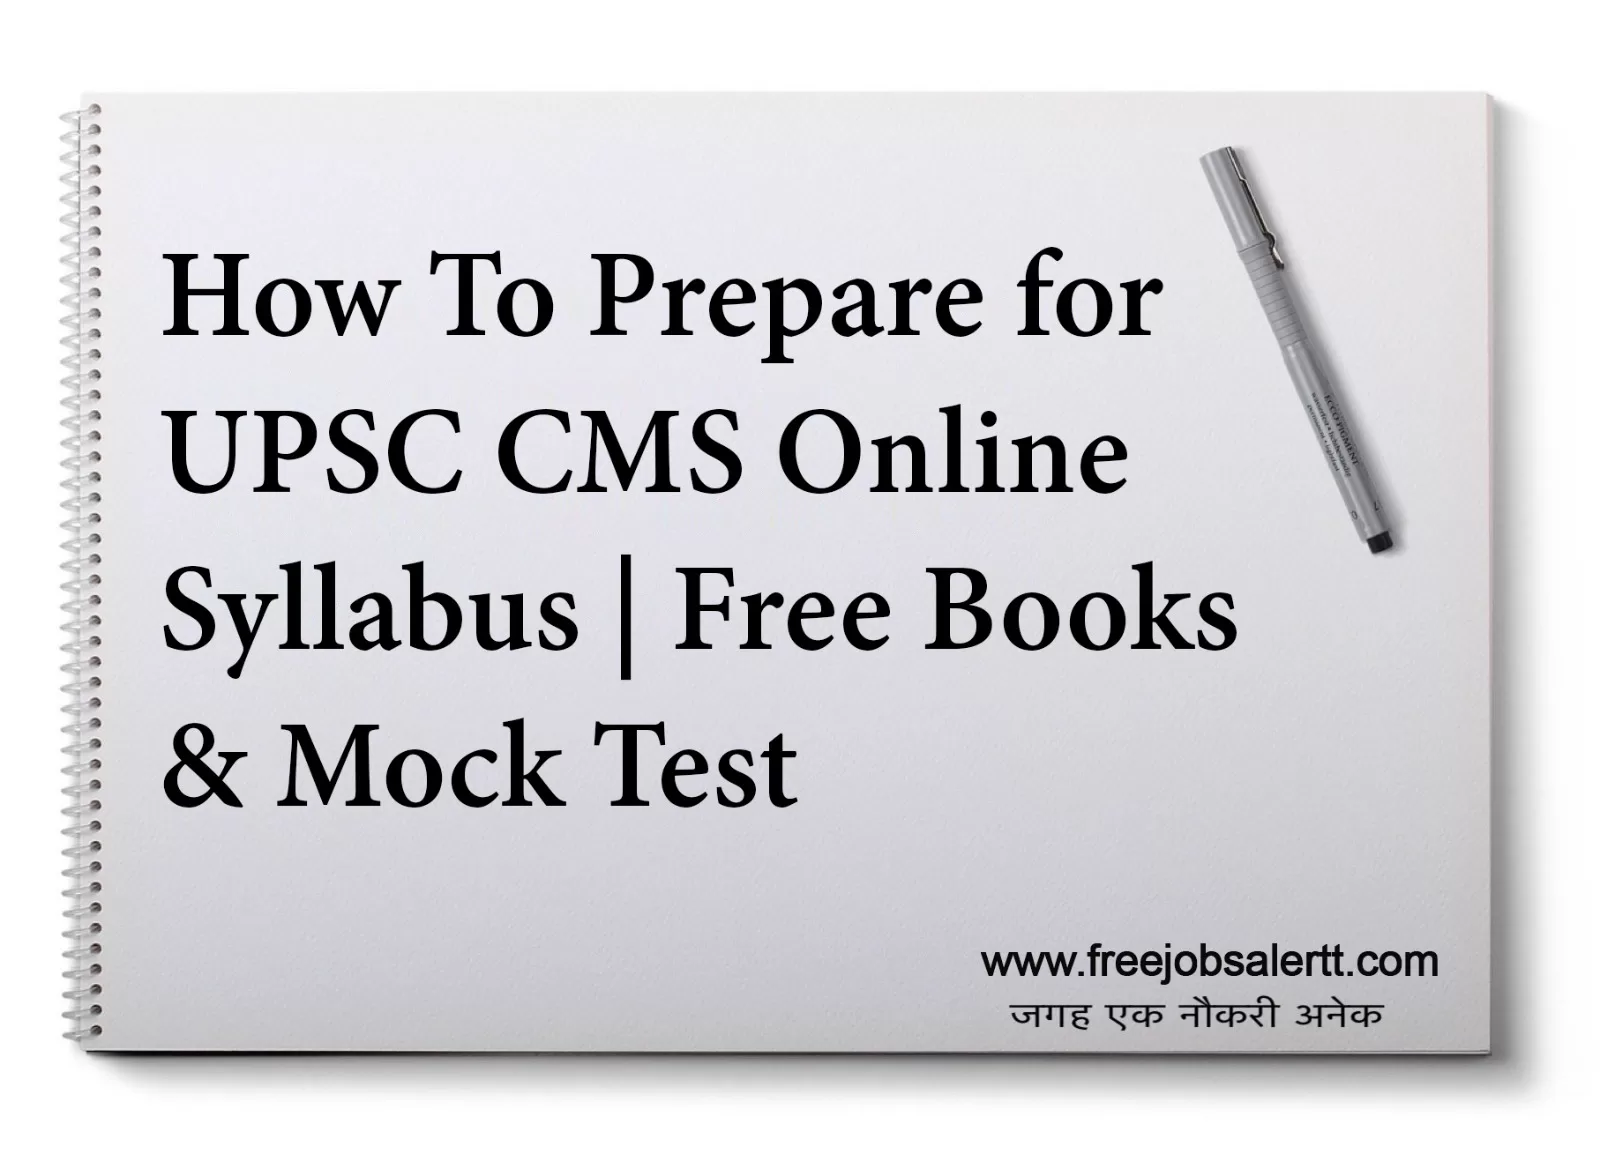 UPSC CMS Online